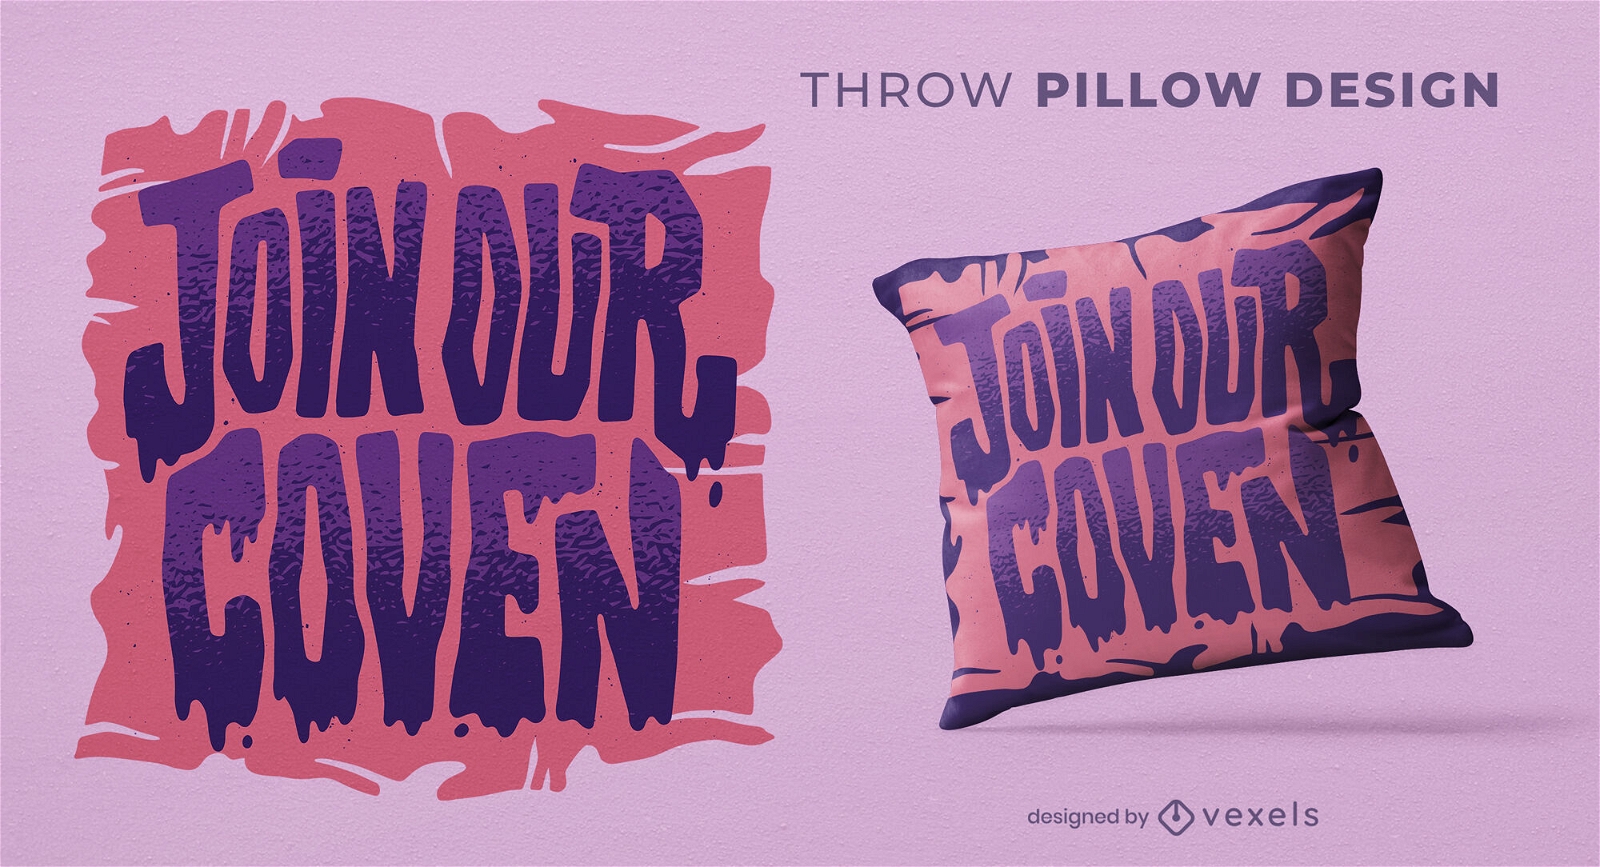 Junte-se ao nosso design de almofadas de halloween coven